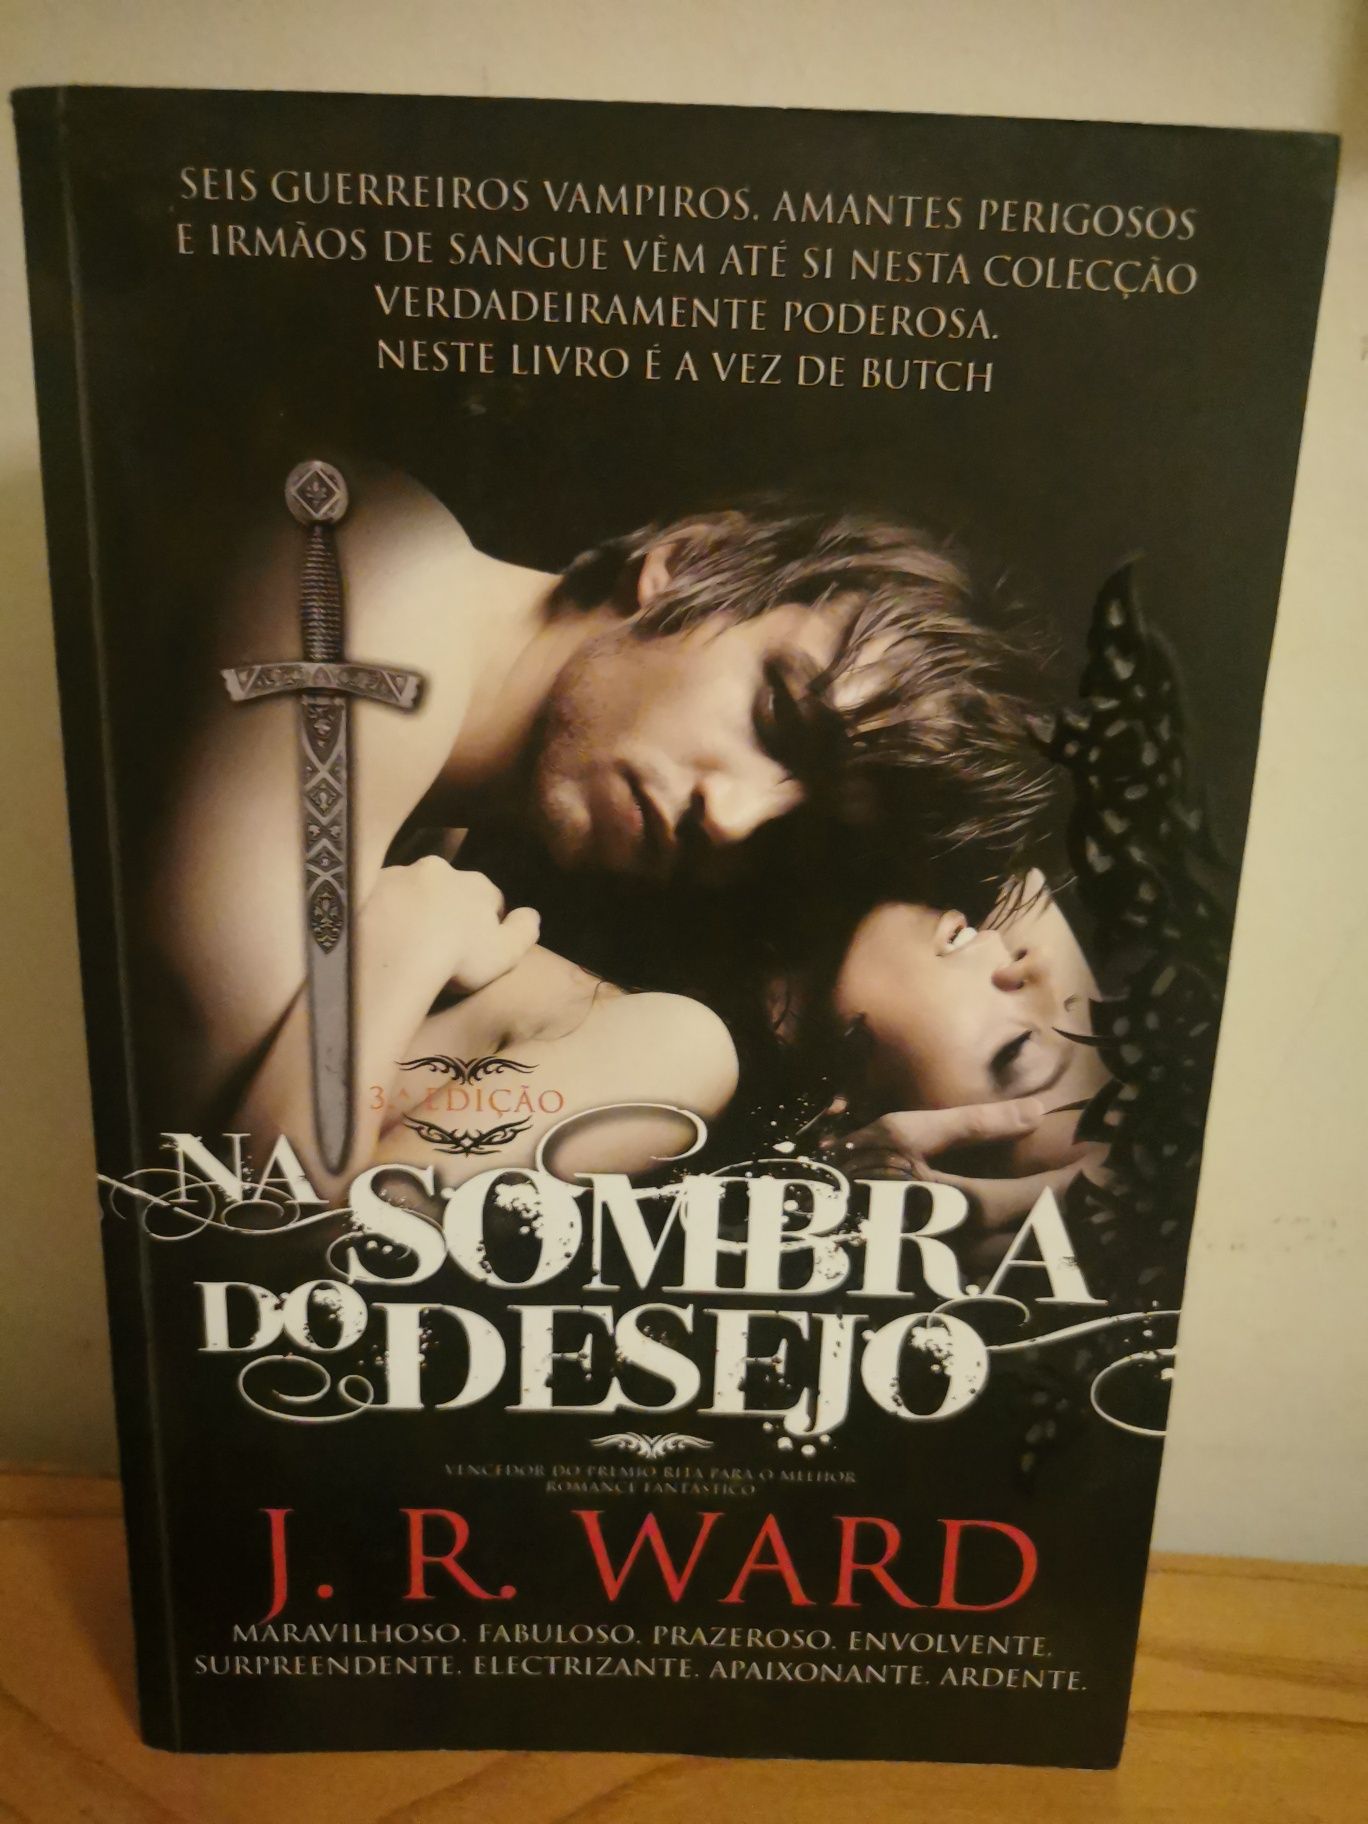 Livro de romance J. R. Ward